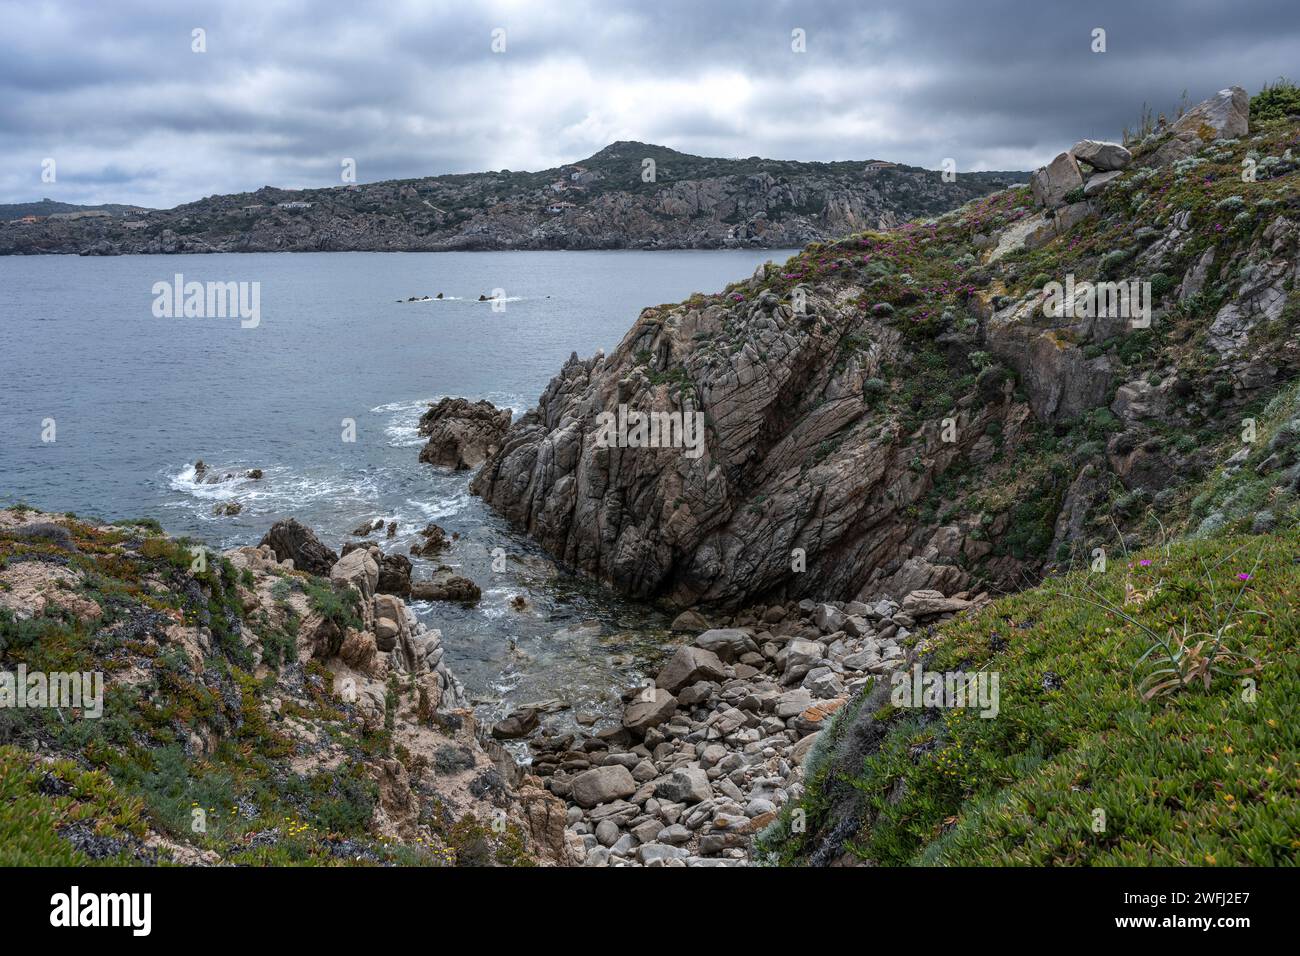 Coastal view from a hiking trail, Santa Teresa Gallura, Sassari, Sardinia, Italy Stock Photo